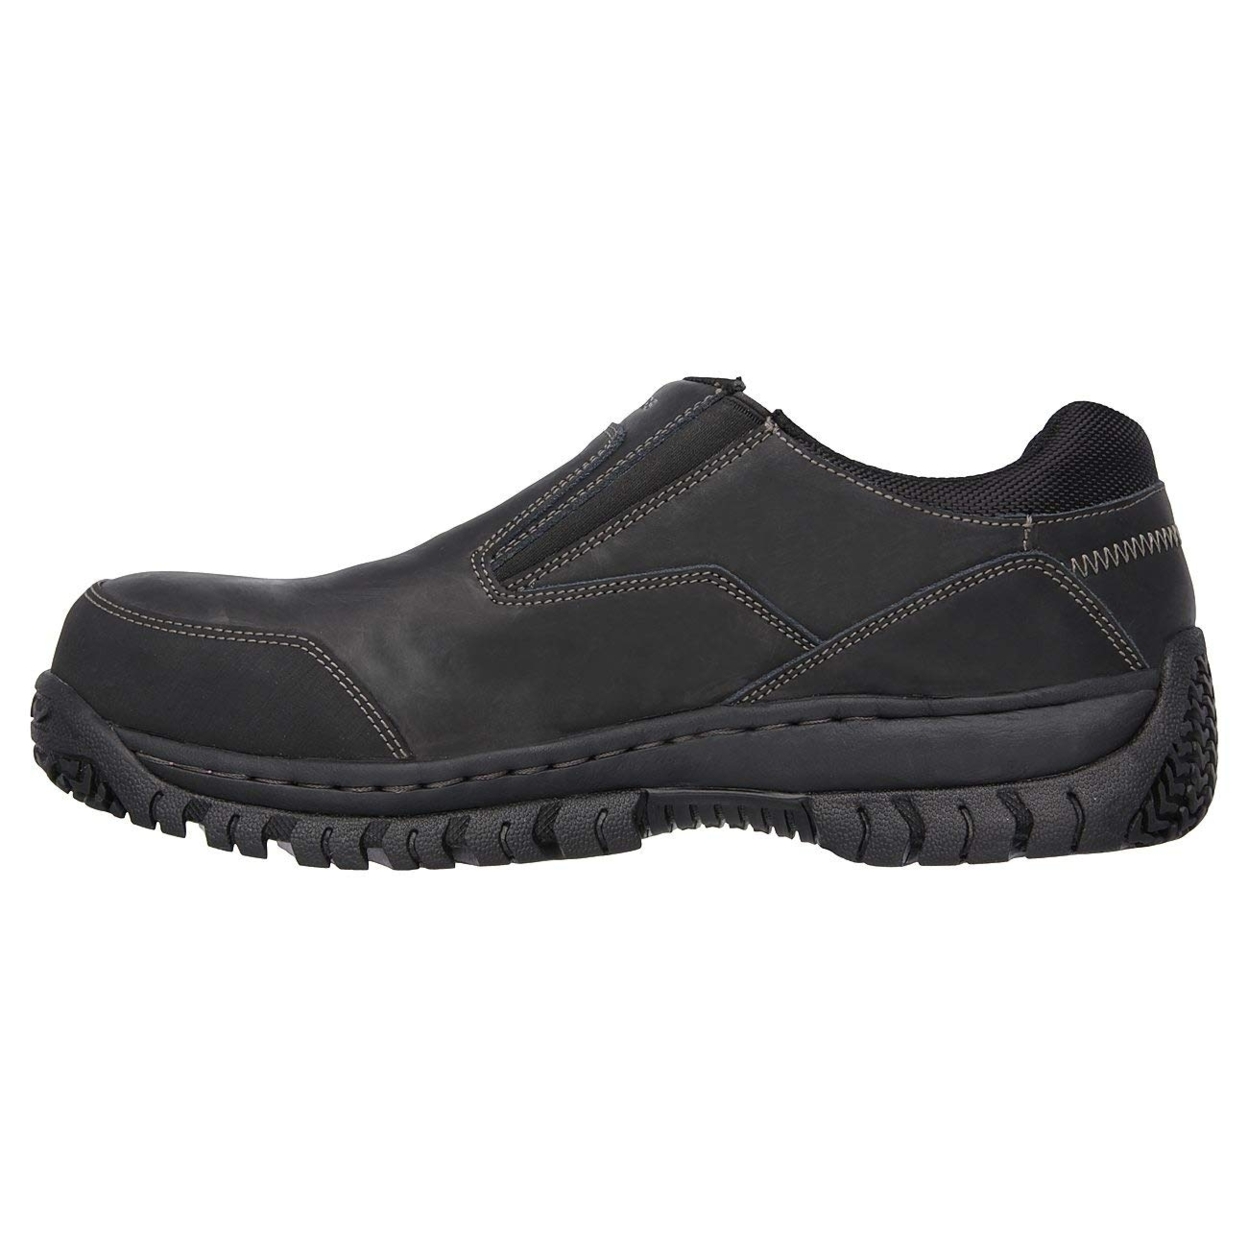 Skechers For Work Men's Hartan Steel Toe Slip-On Shoe Varies BLACK - BLACK, 9.5